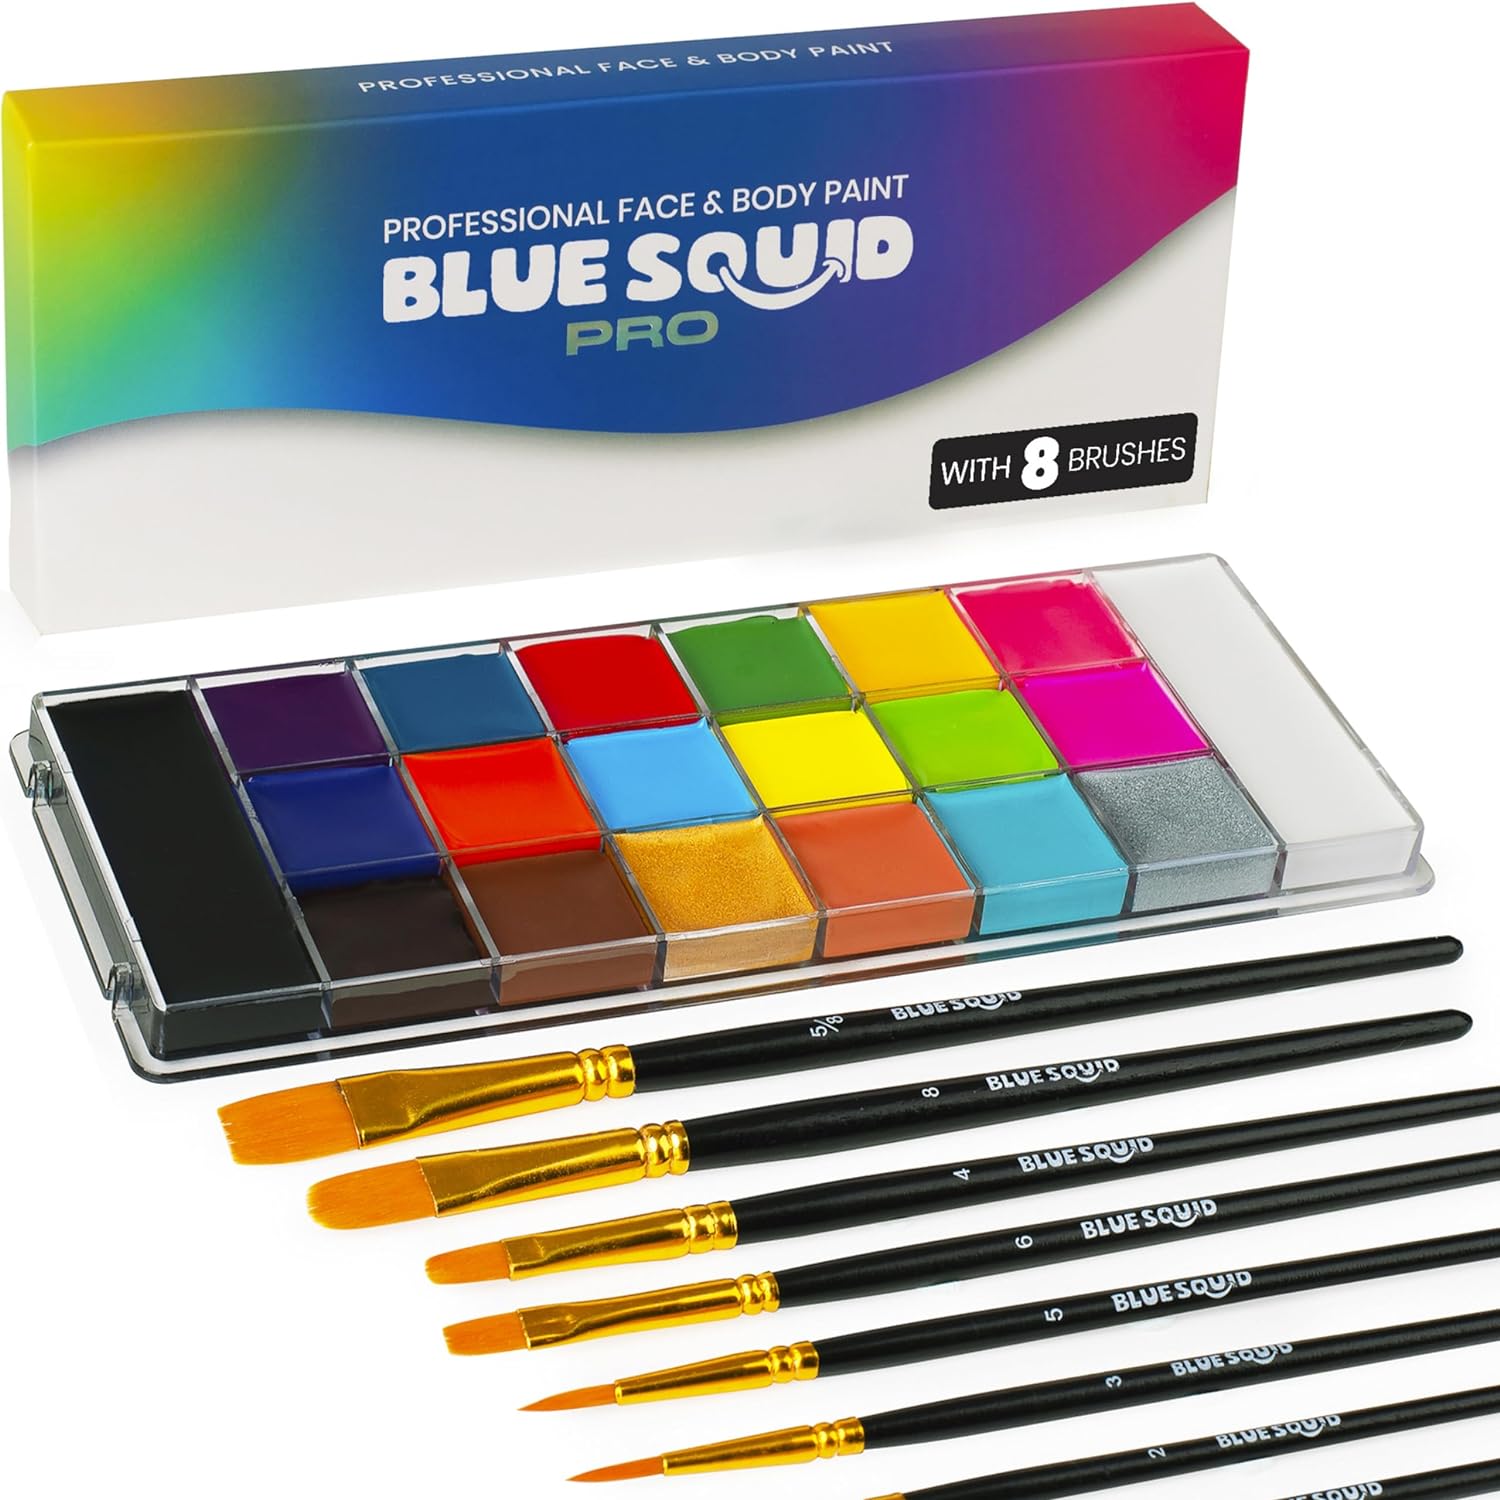 Professional Face Paint Kit - Blue Squid PRO 20x10g Classic Color Palette  with Paint Brushes, Professional Face & Body Painting Supplies SFX, Adult &  Kids, Superior Safe Paint Sensitive Skin